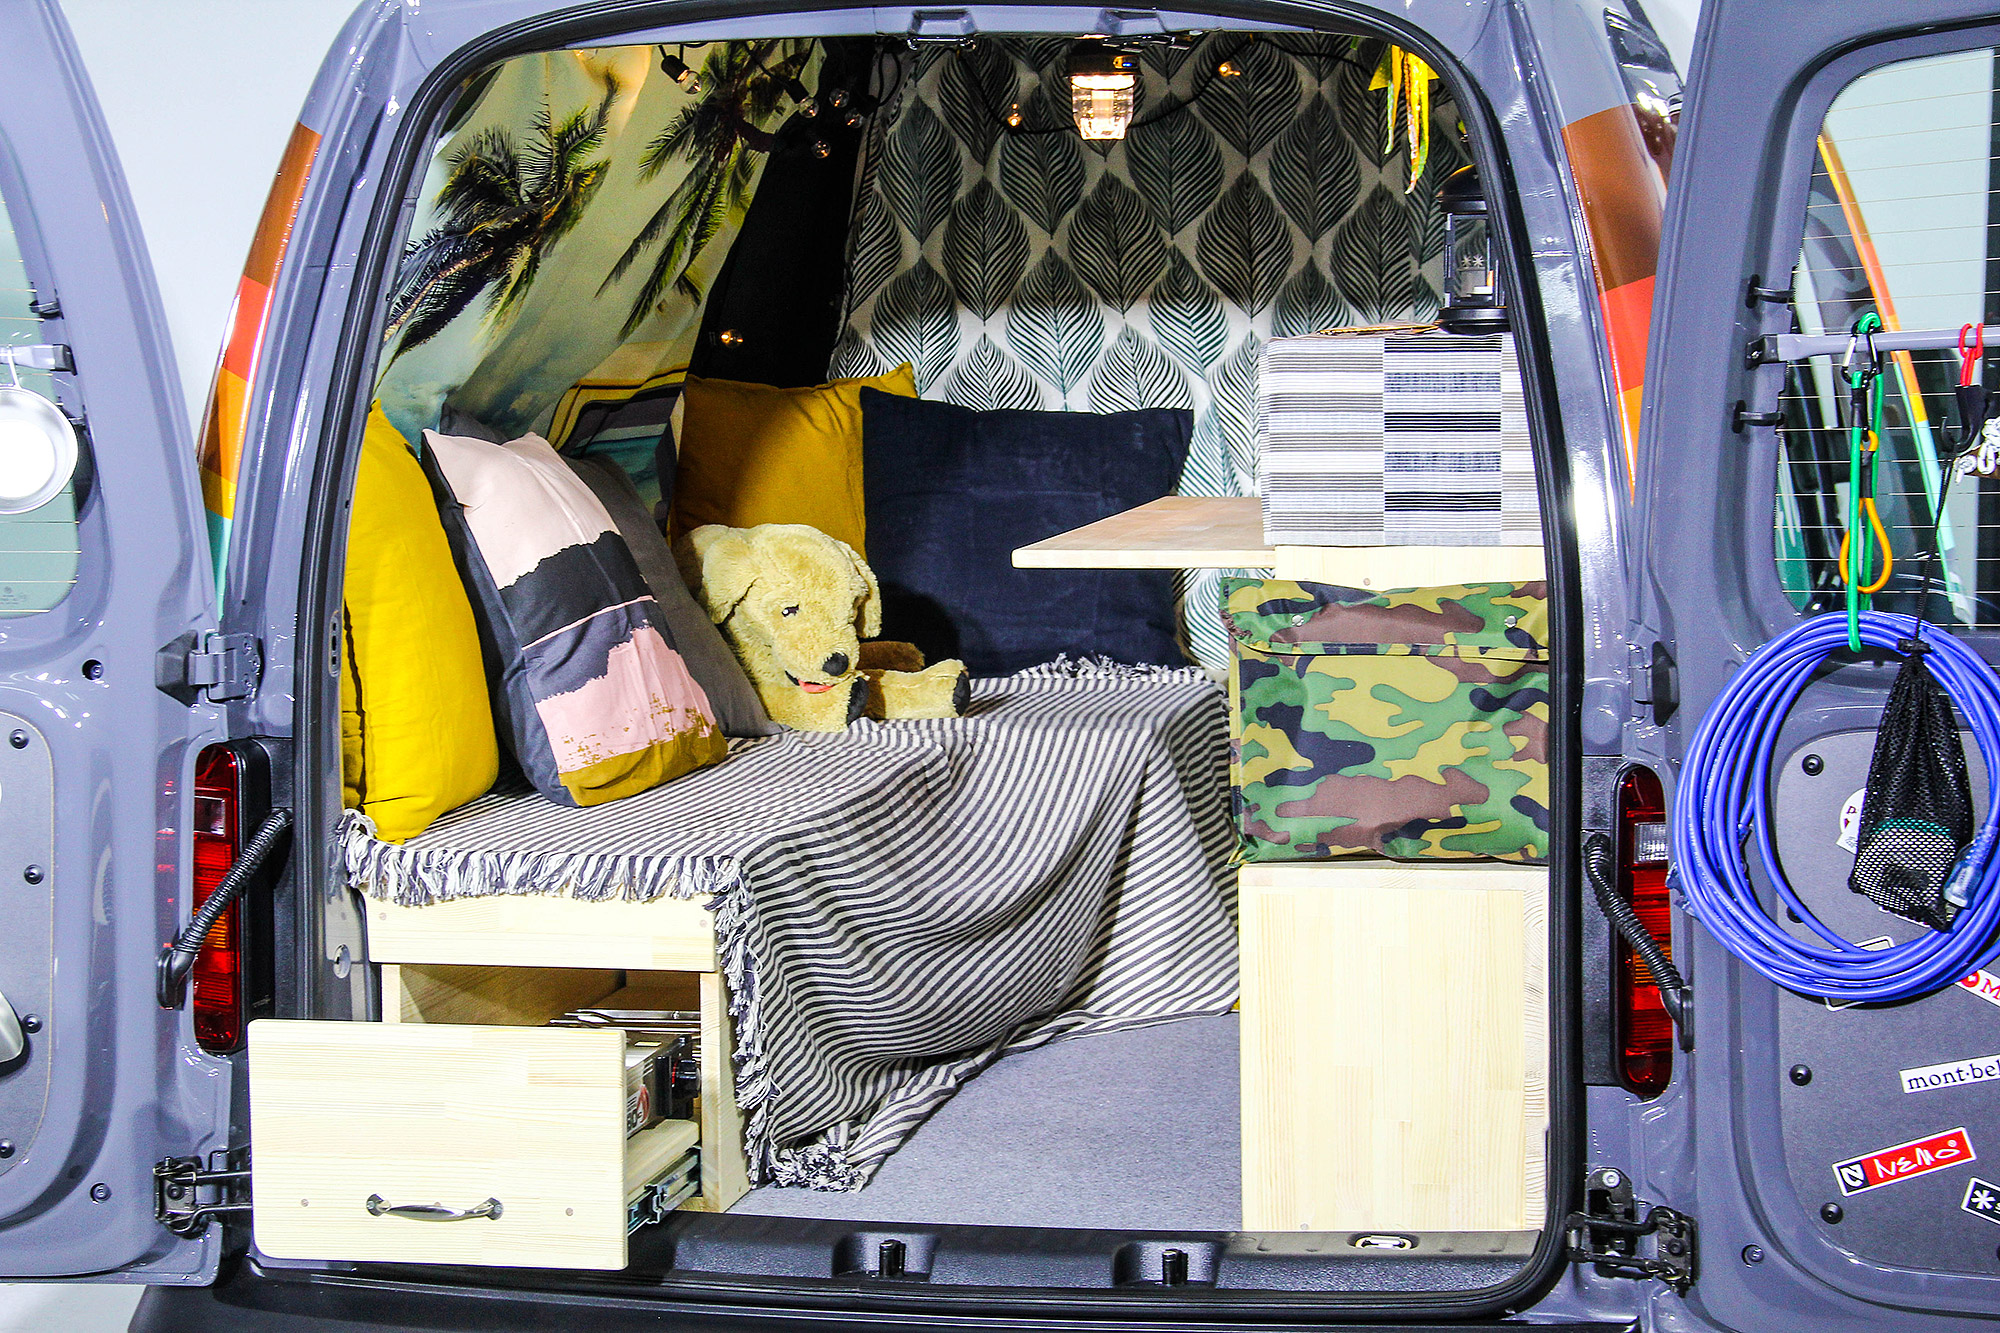 Caddy Van 的貨艙可以依照自己的想像規畫收納空間，變成完全個性化的露營車。